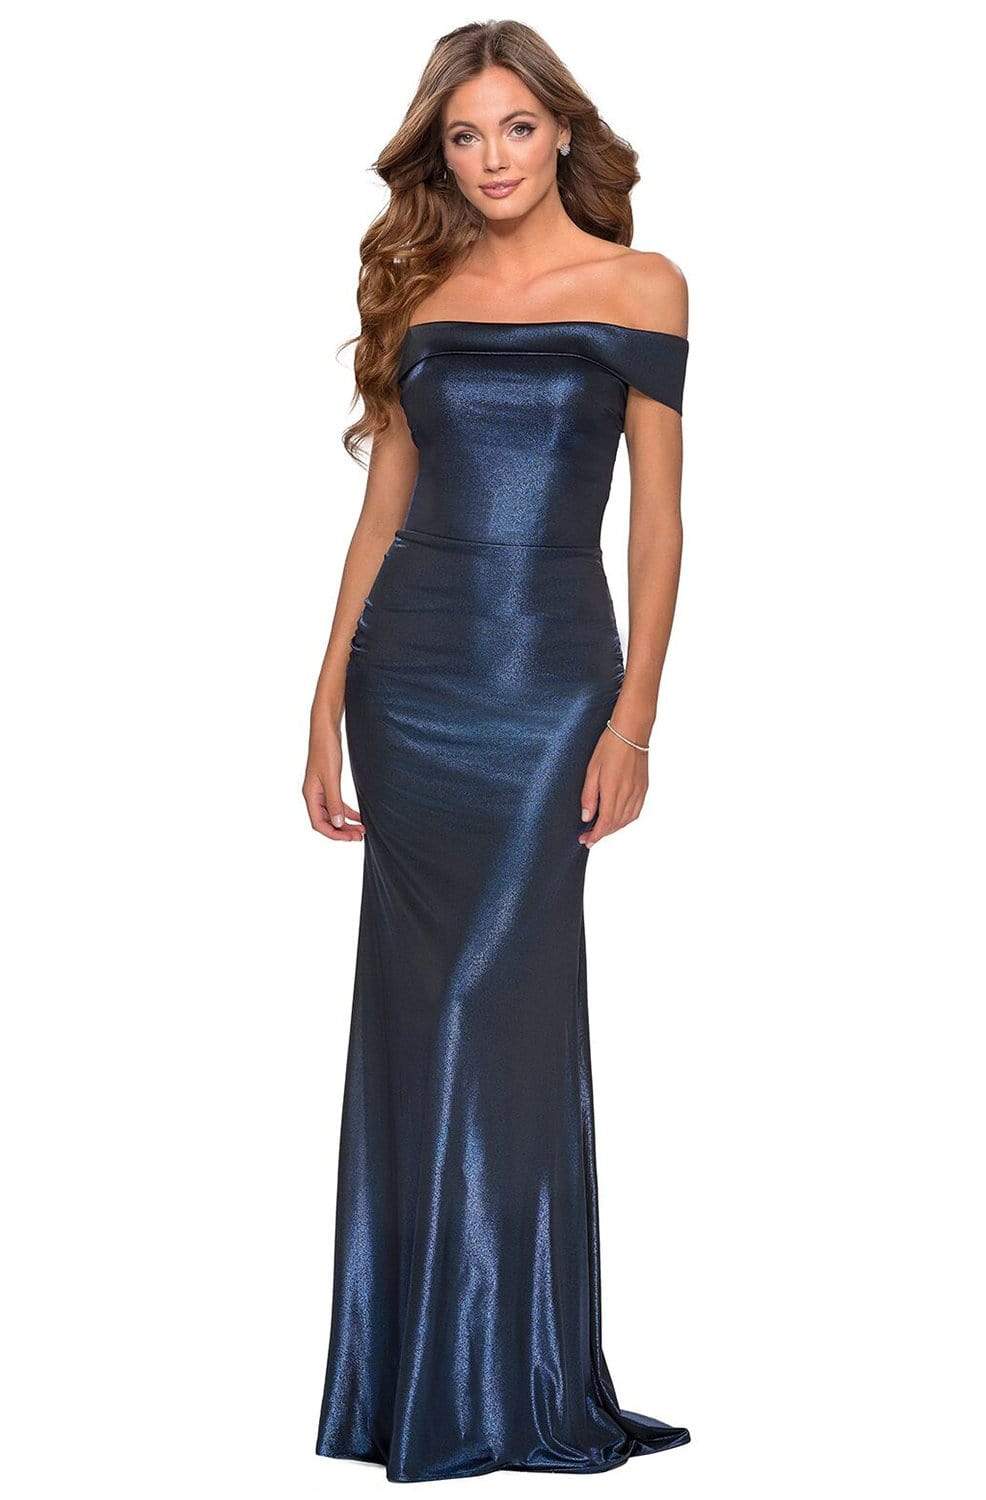 Image of La Femme - 28740 Off-Shoulder Metallic Sheath Dress